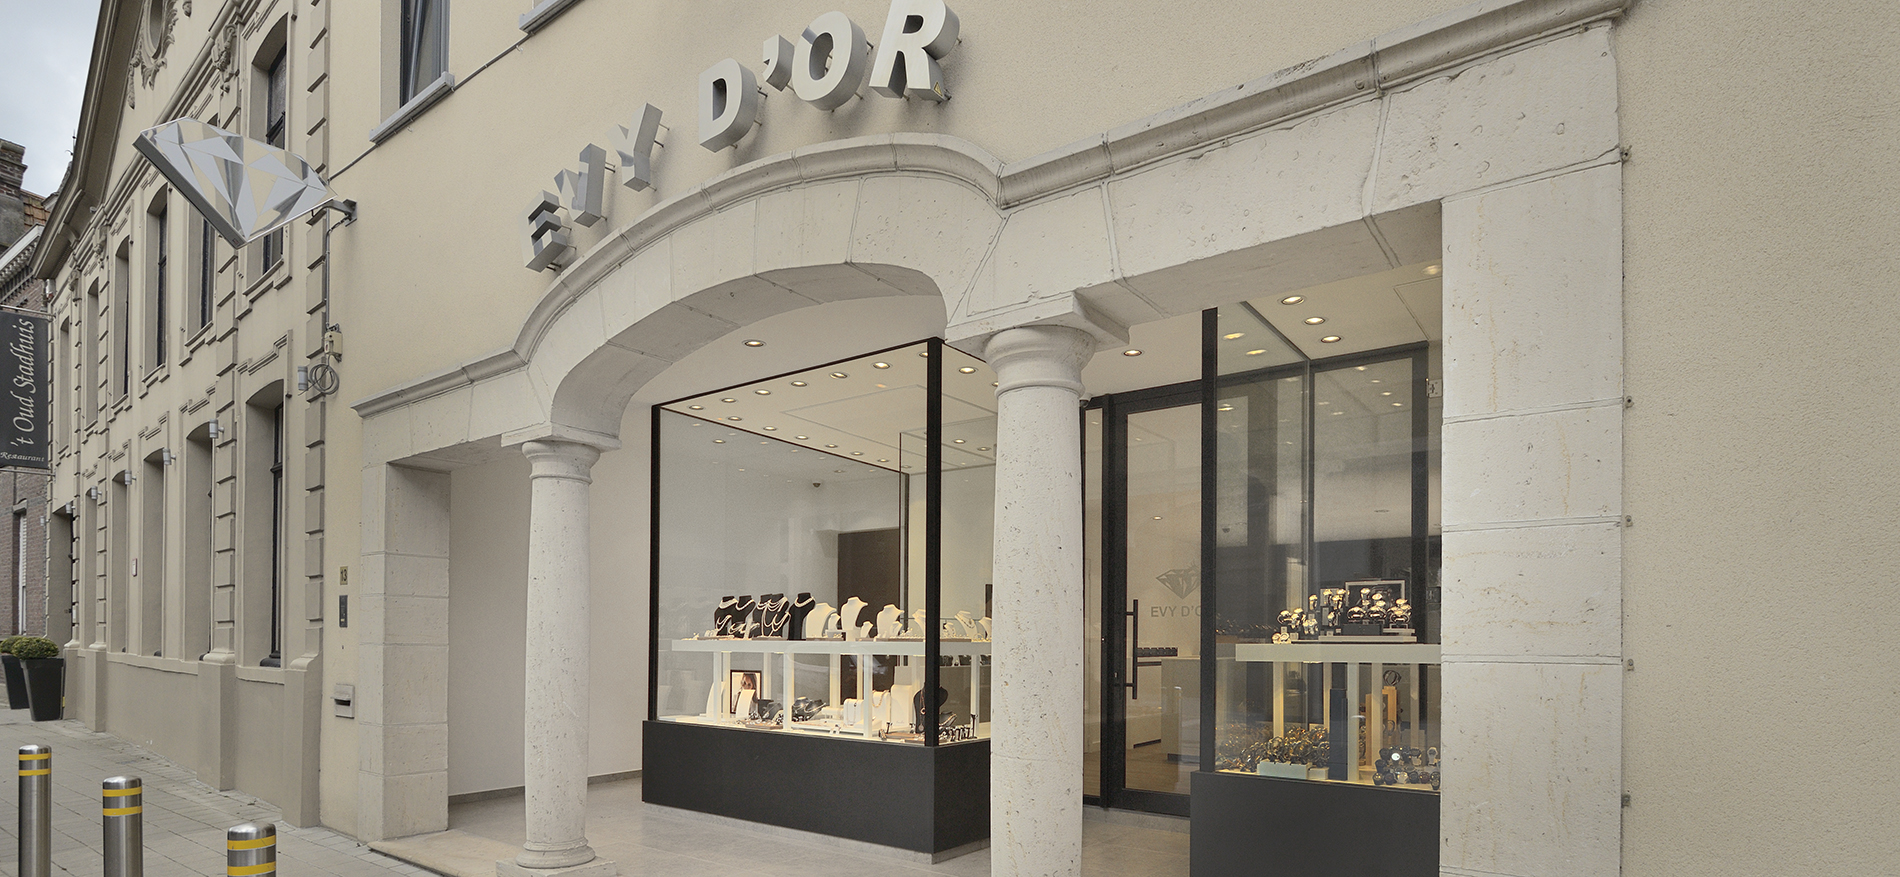 Juwelen Evy d’Or in Ingelmunster (BE) – Shopdesign winkelconcept - 